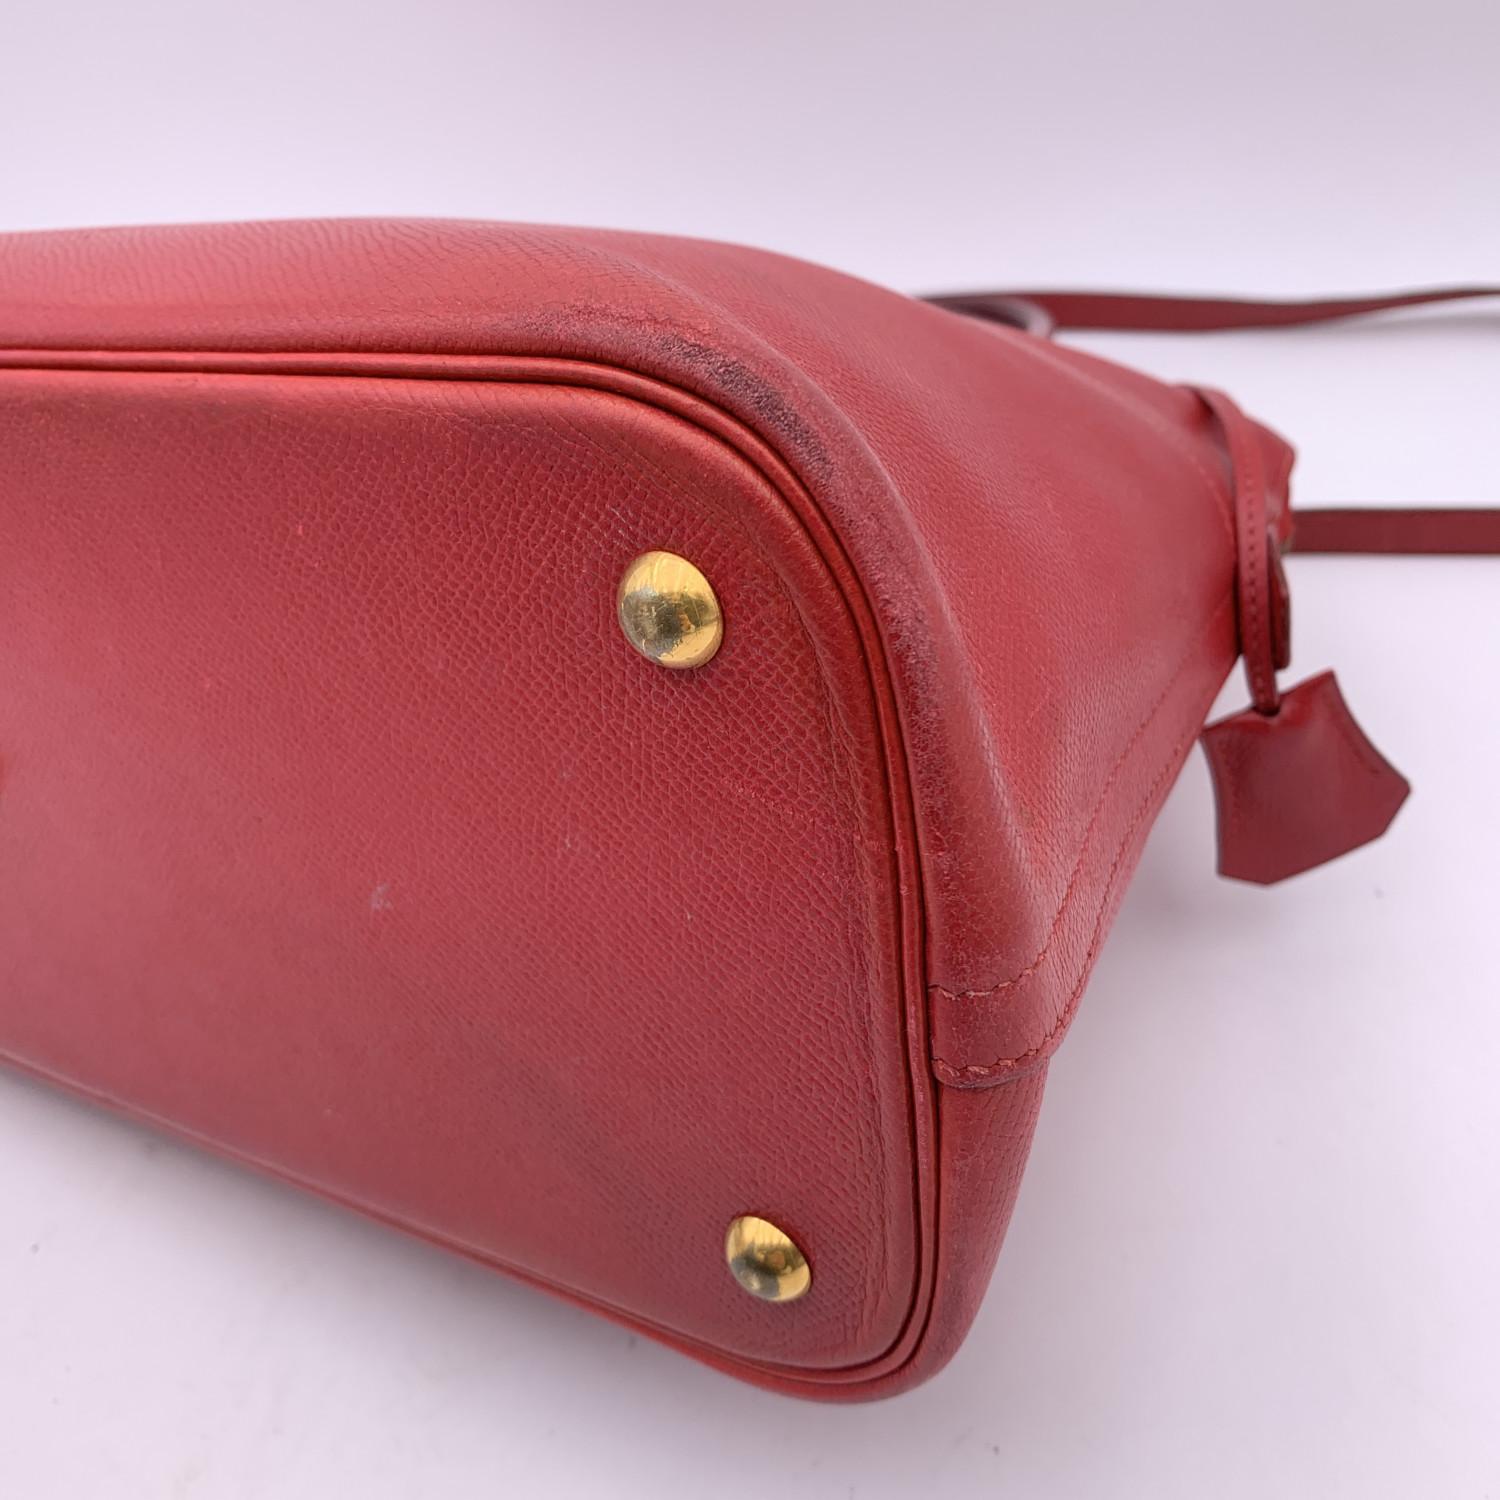 Hermes Vintage 1992 Red Leather Bolide 35 Satchel Bag with Strap For Sale 6